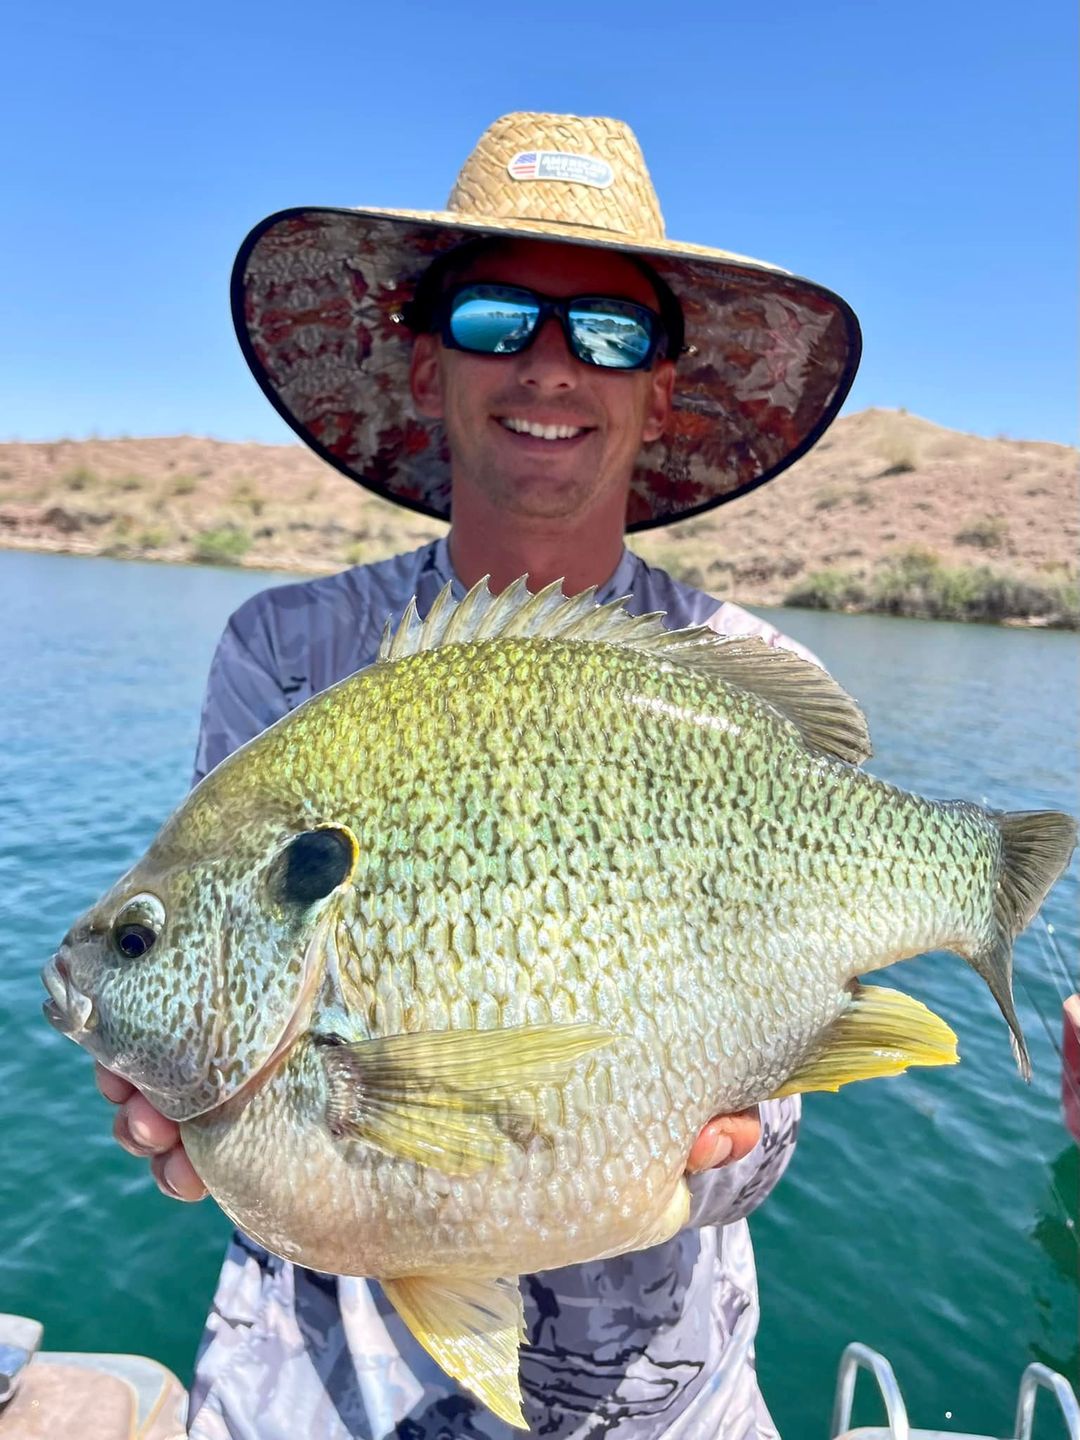 Angler Catches Giant 5-Pound Redear Sunfish on Lake Havasu